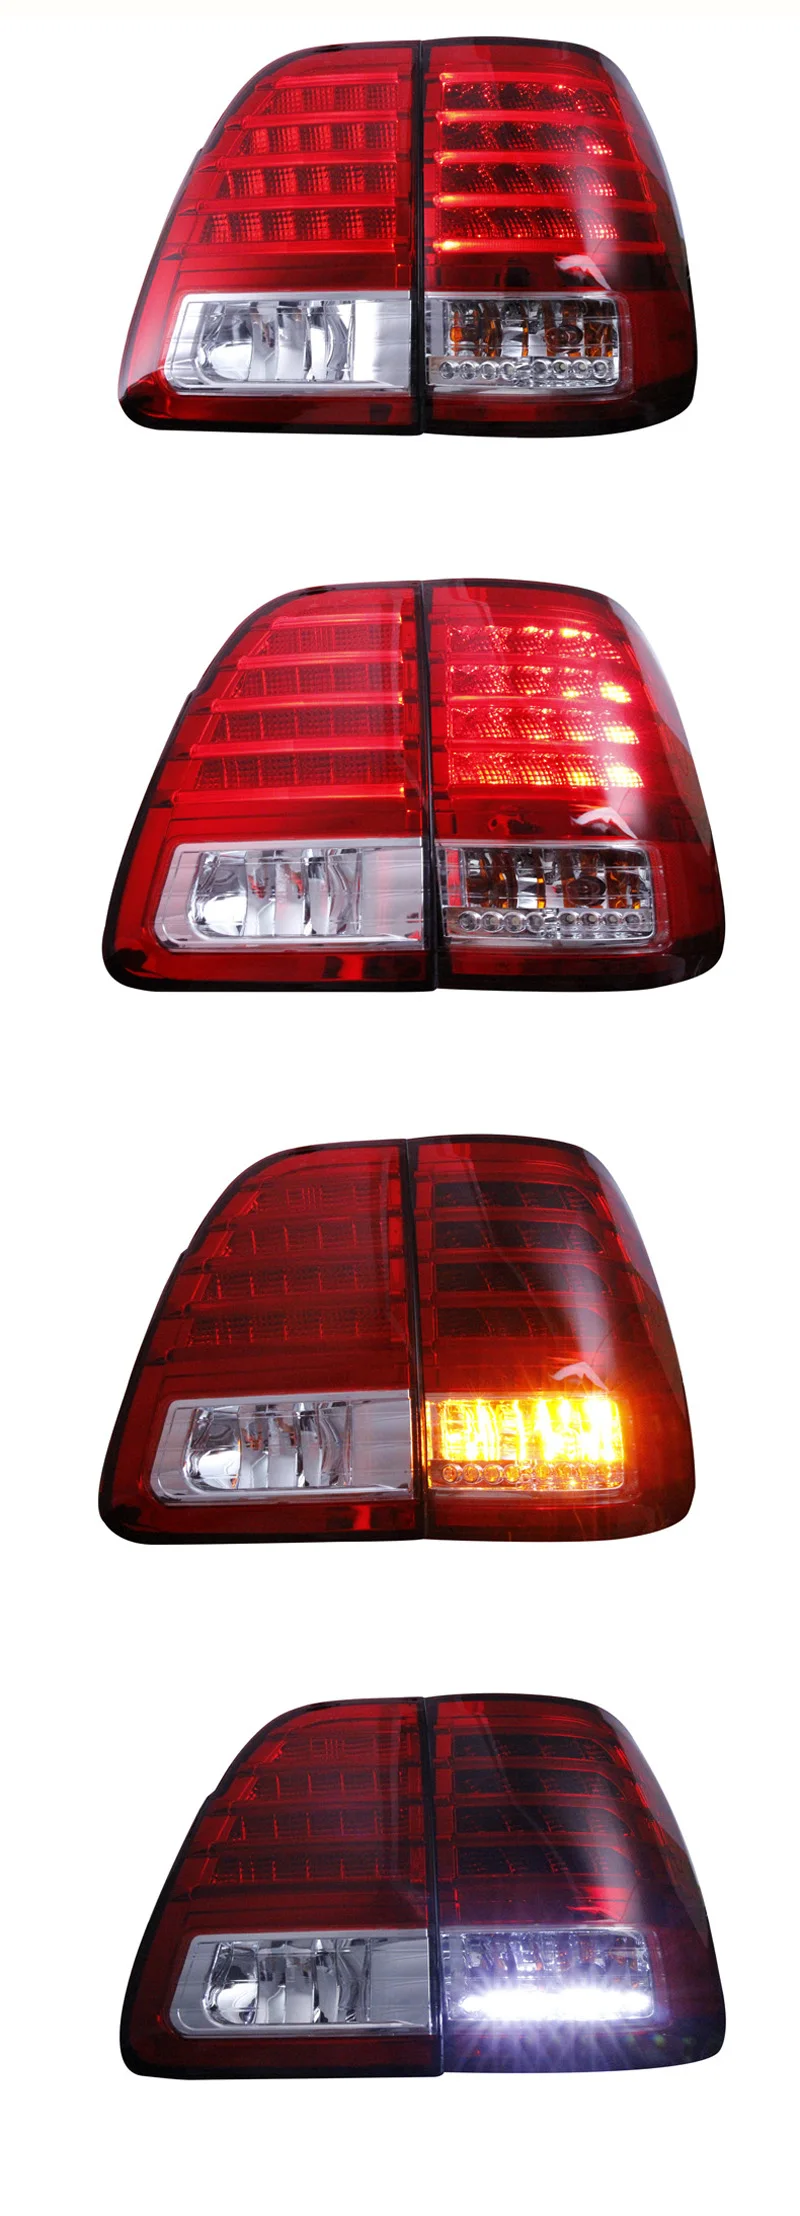 Car LED Tail Light Taillight For Toyota Land Cruiser 100 FJ100 LC100 1998- 2007 Rear Fog Lamp+ Brake+ Reverse+ Turn Signal